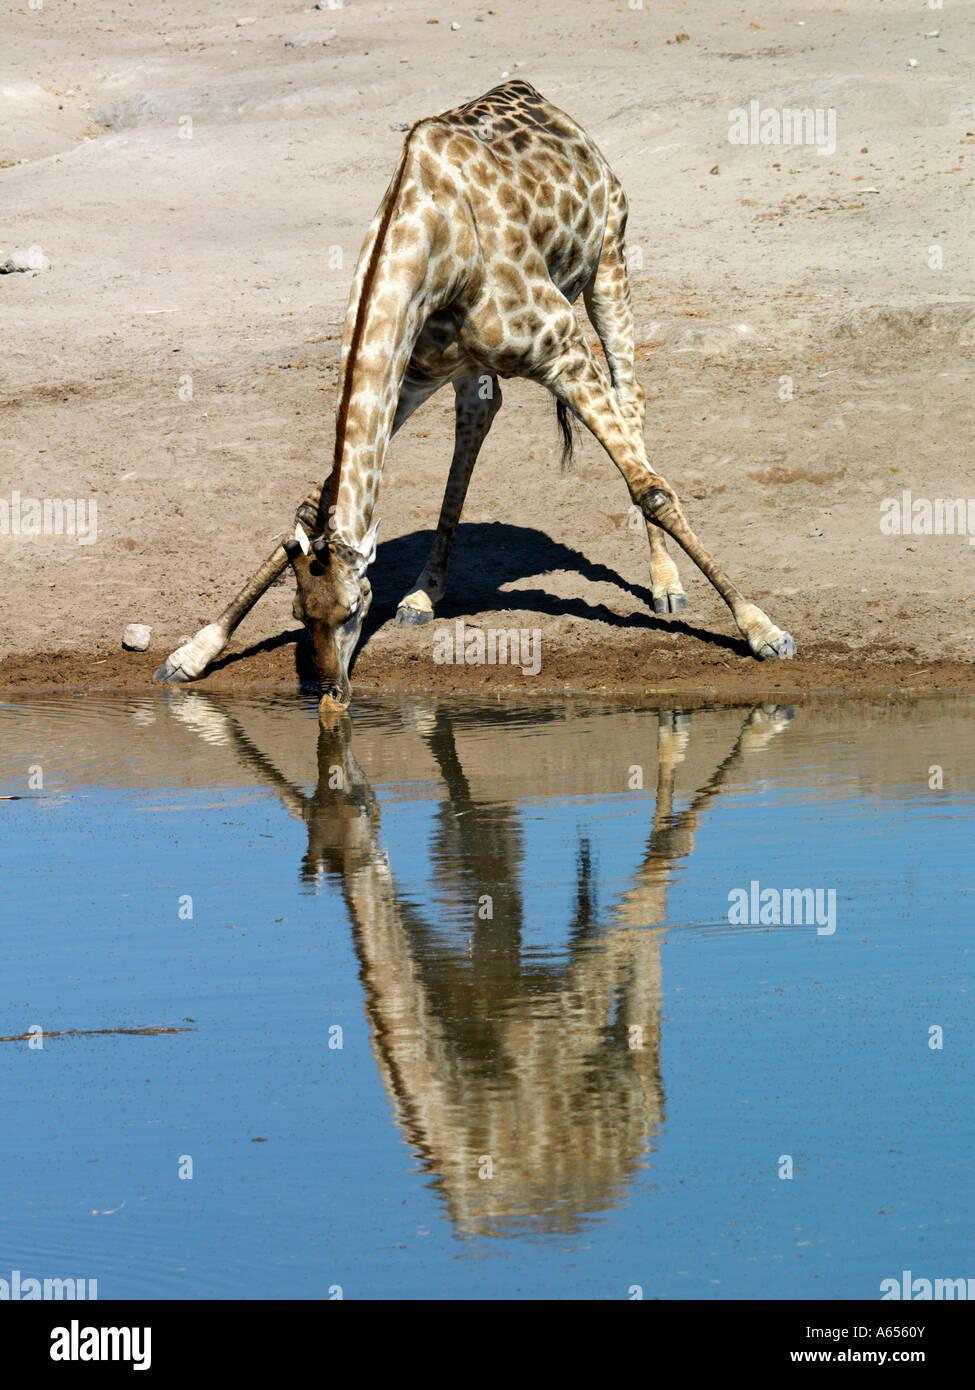 A giraffe drinking at a waterhole on the edge of the Etosha Pan  Stock Photo